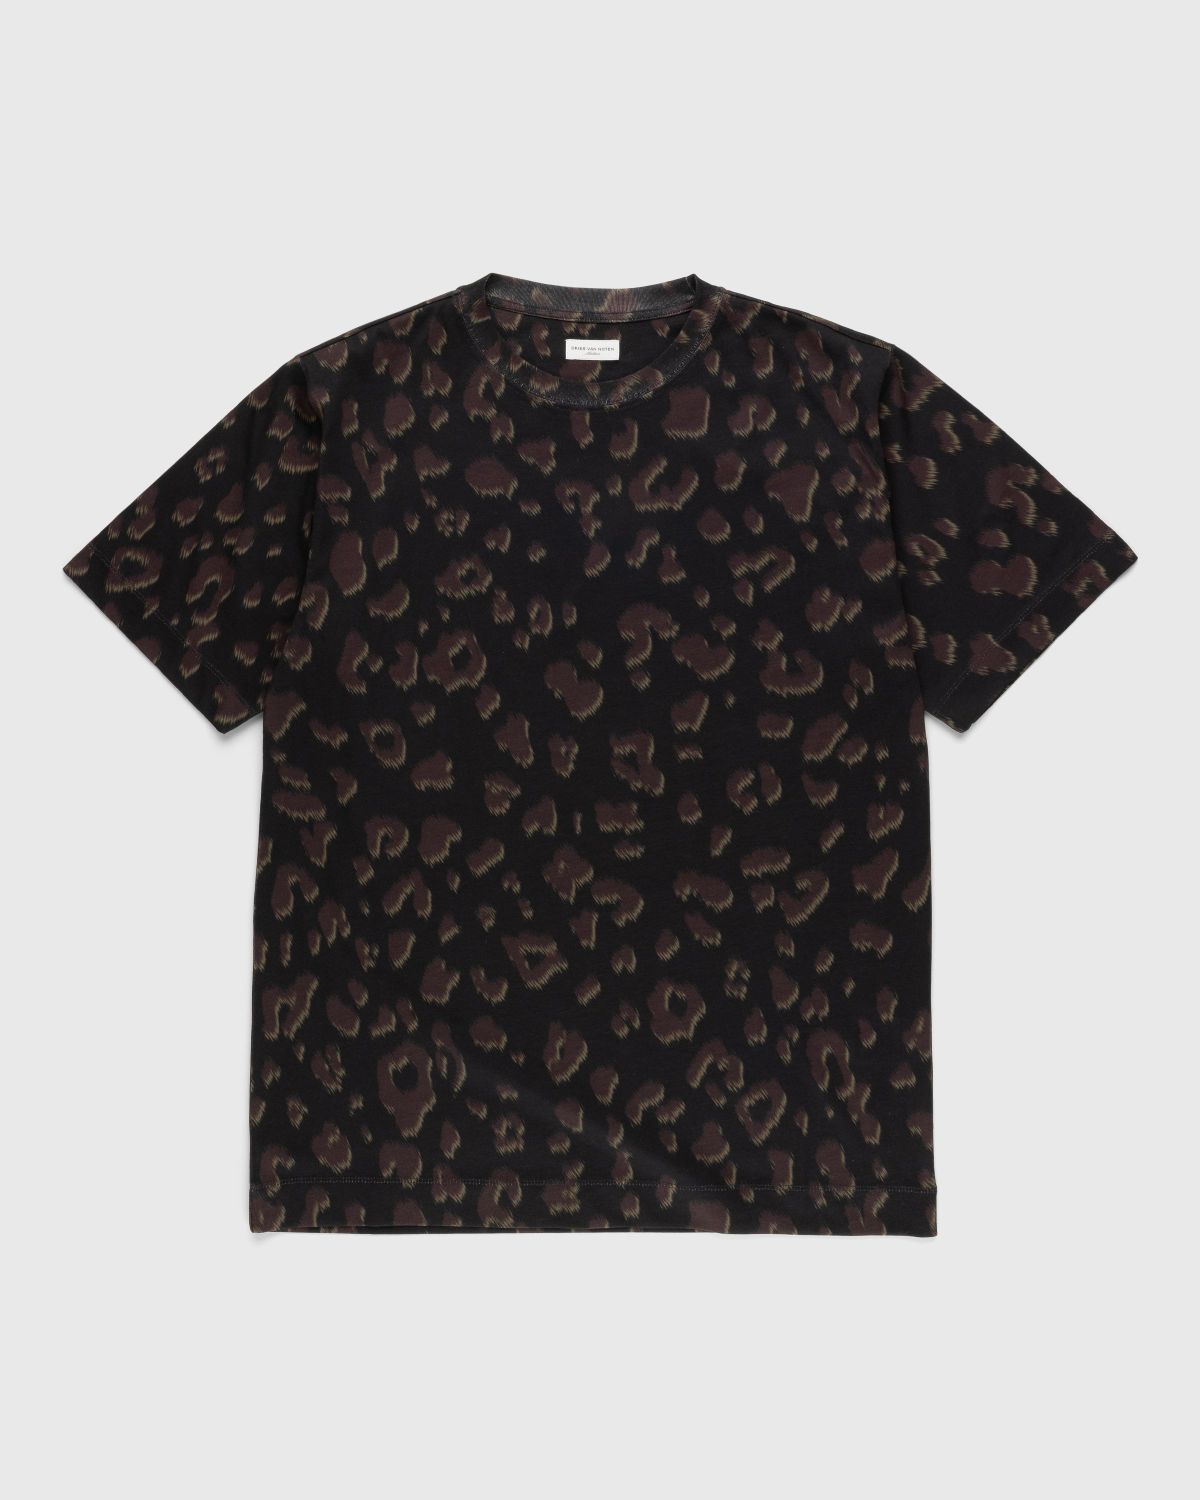 Dries van Noten – Hertz T-Shirt Black - T-shirts - Black - Image 1